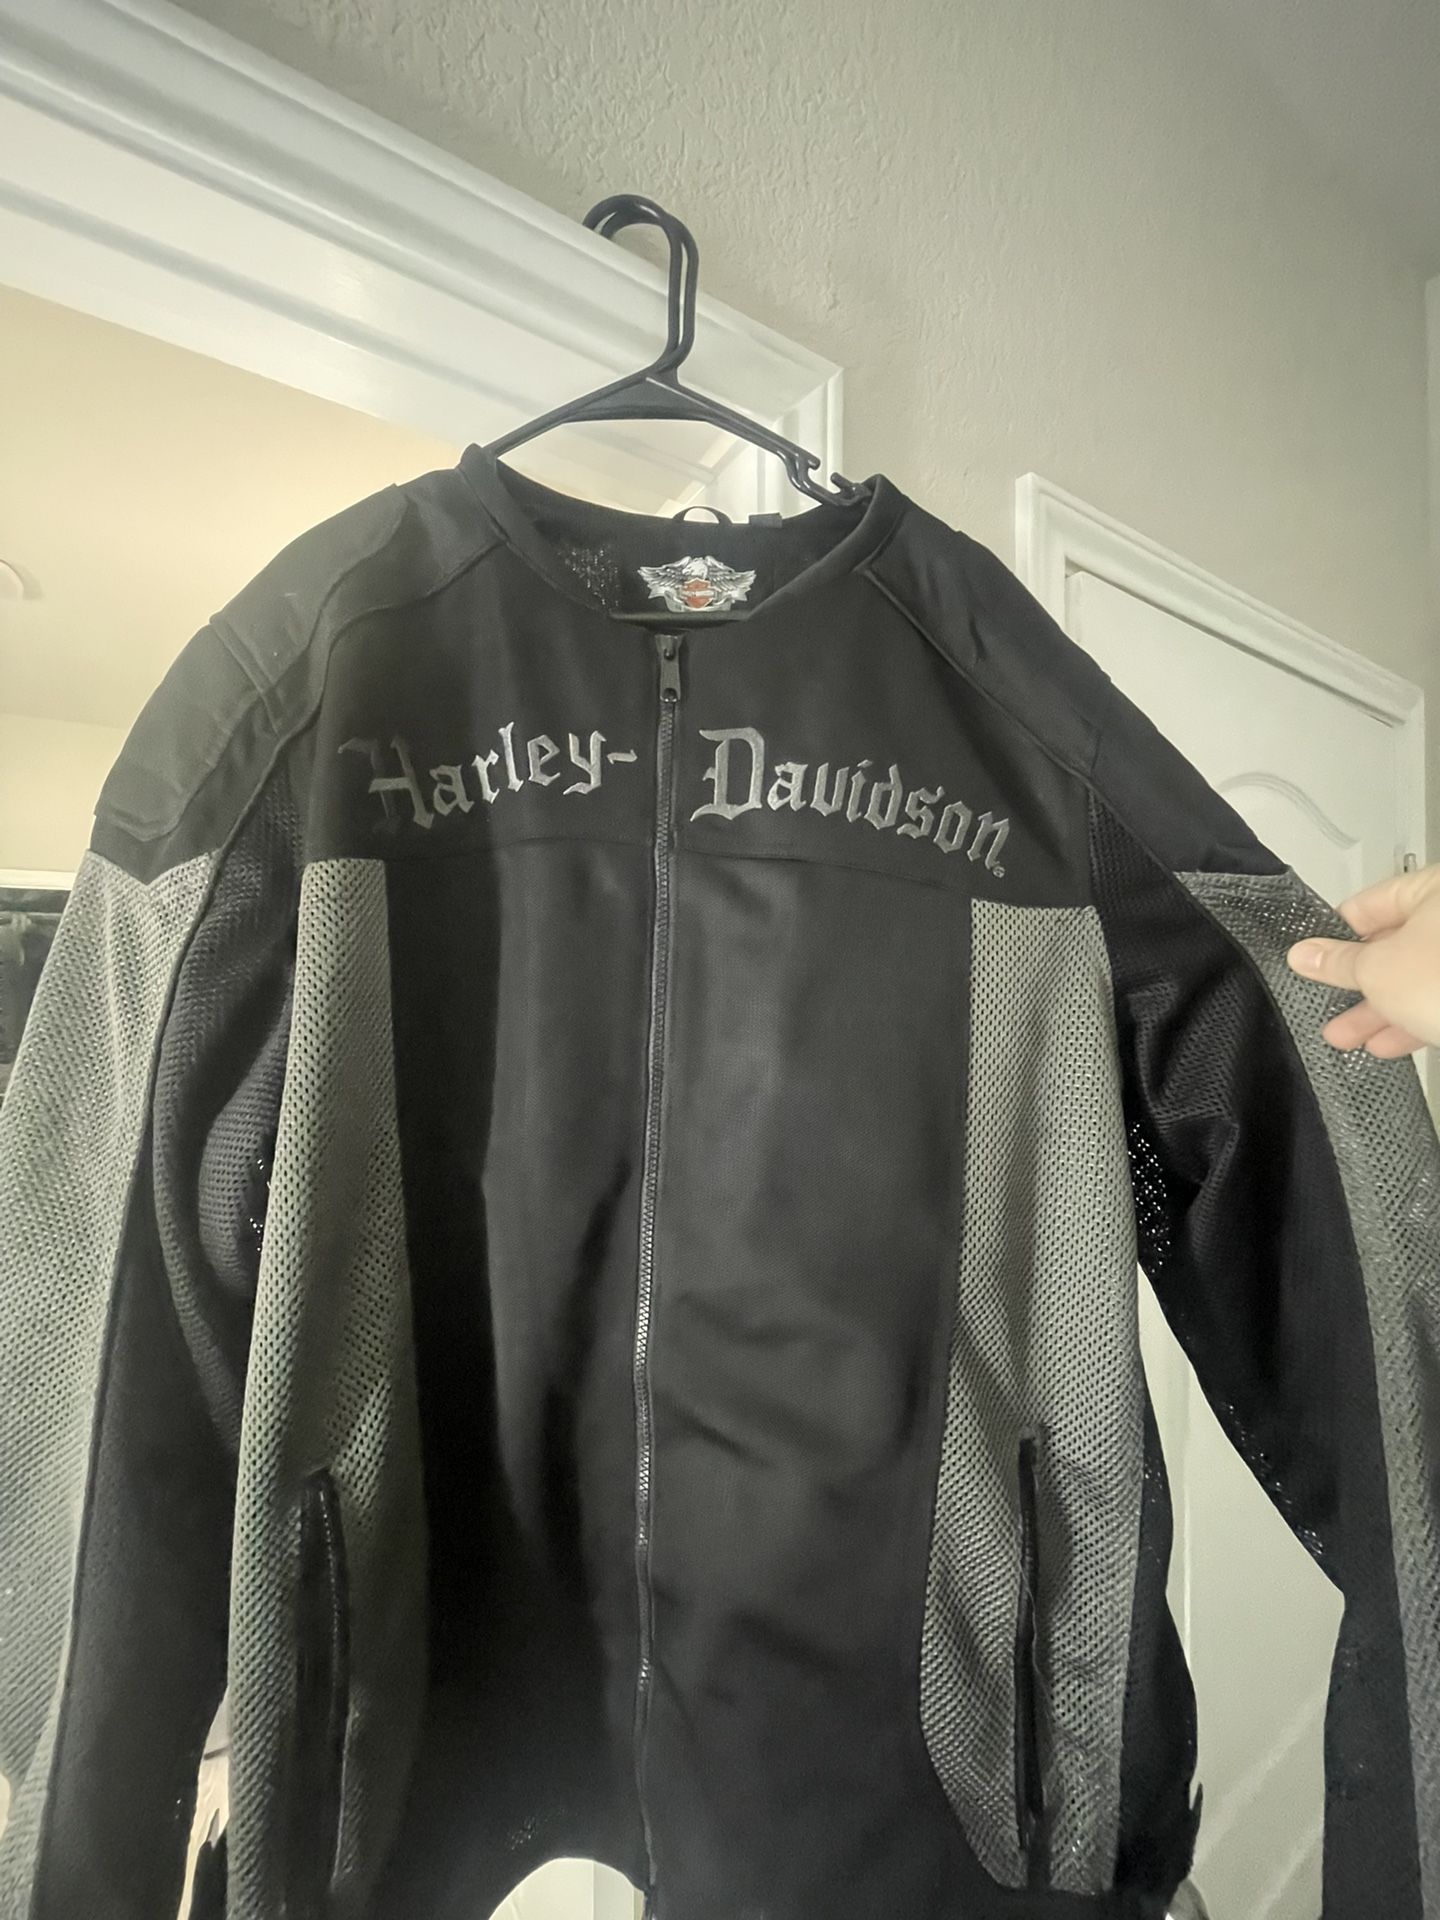 Harley Davidson Riding Jacket 